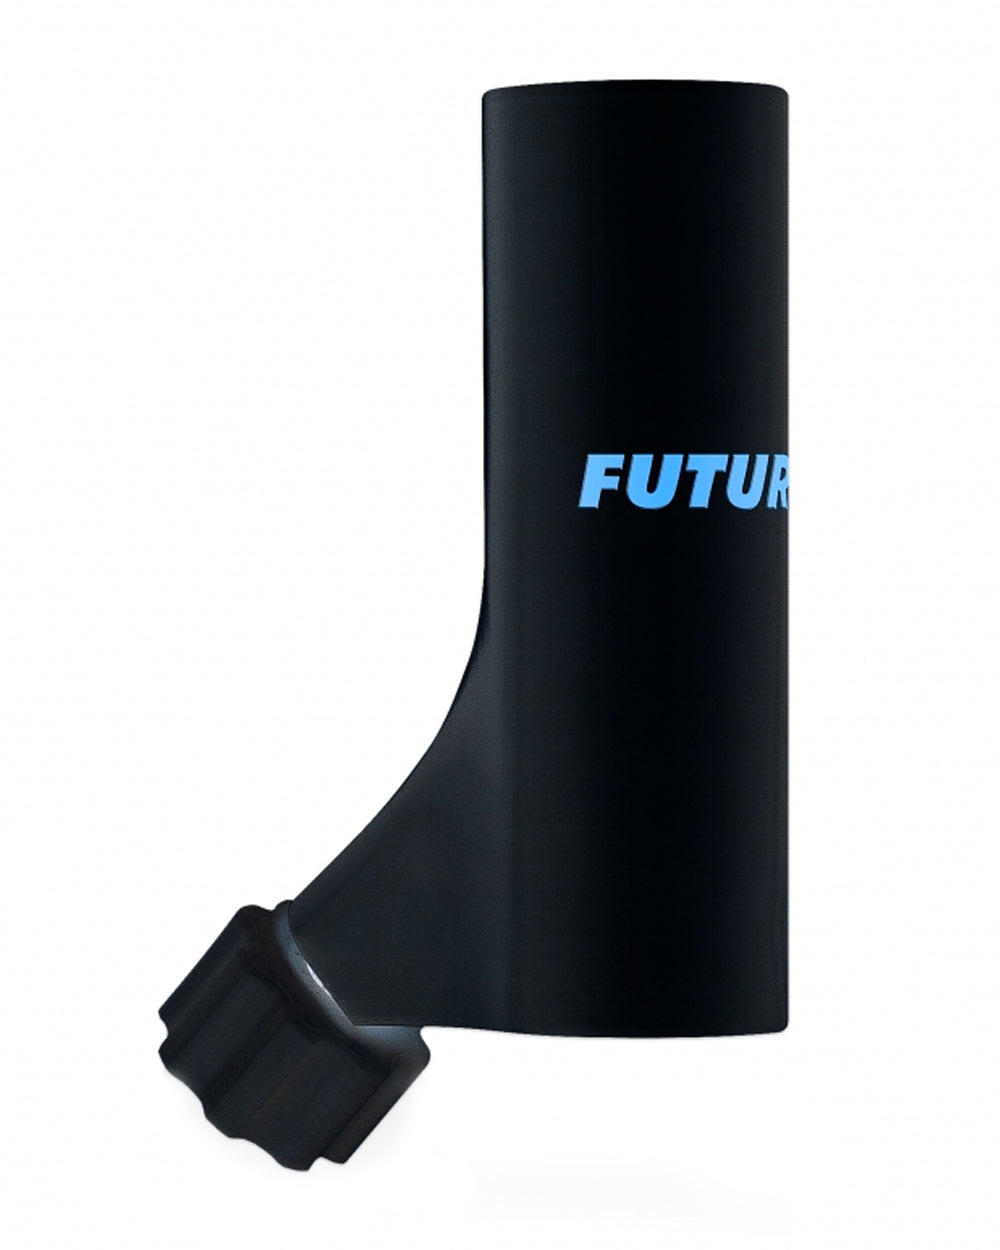 FUTUROLA | Venturi Shrink Sleeve Applicator for CONE LOCK™ 1X Tubes | Label and Seal Cones & Cartridges - 3